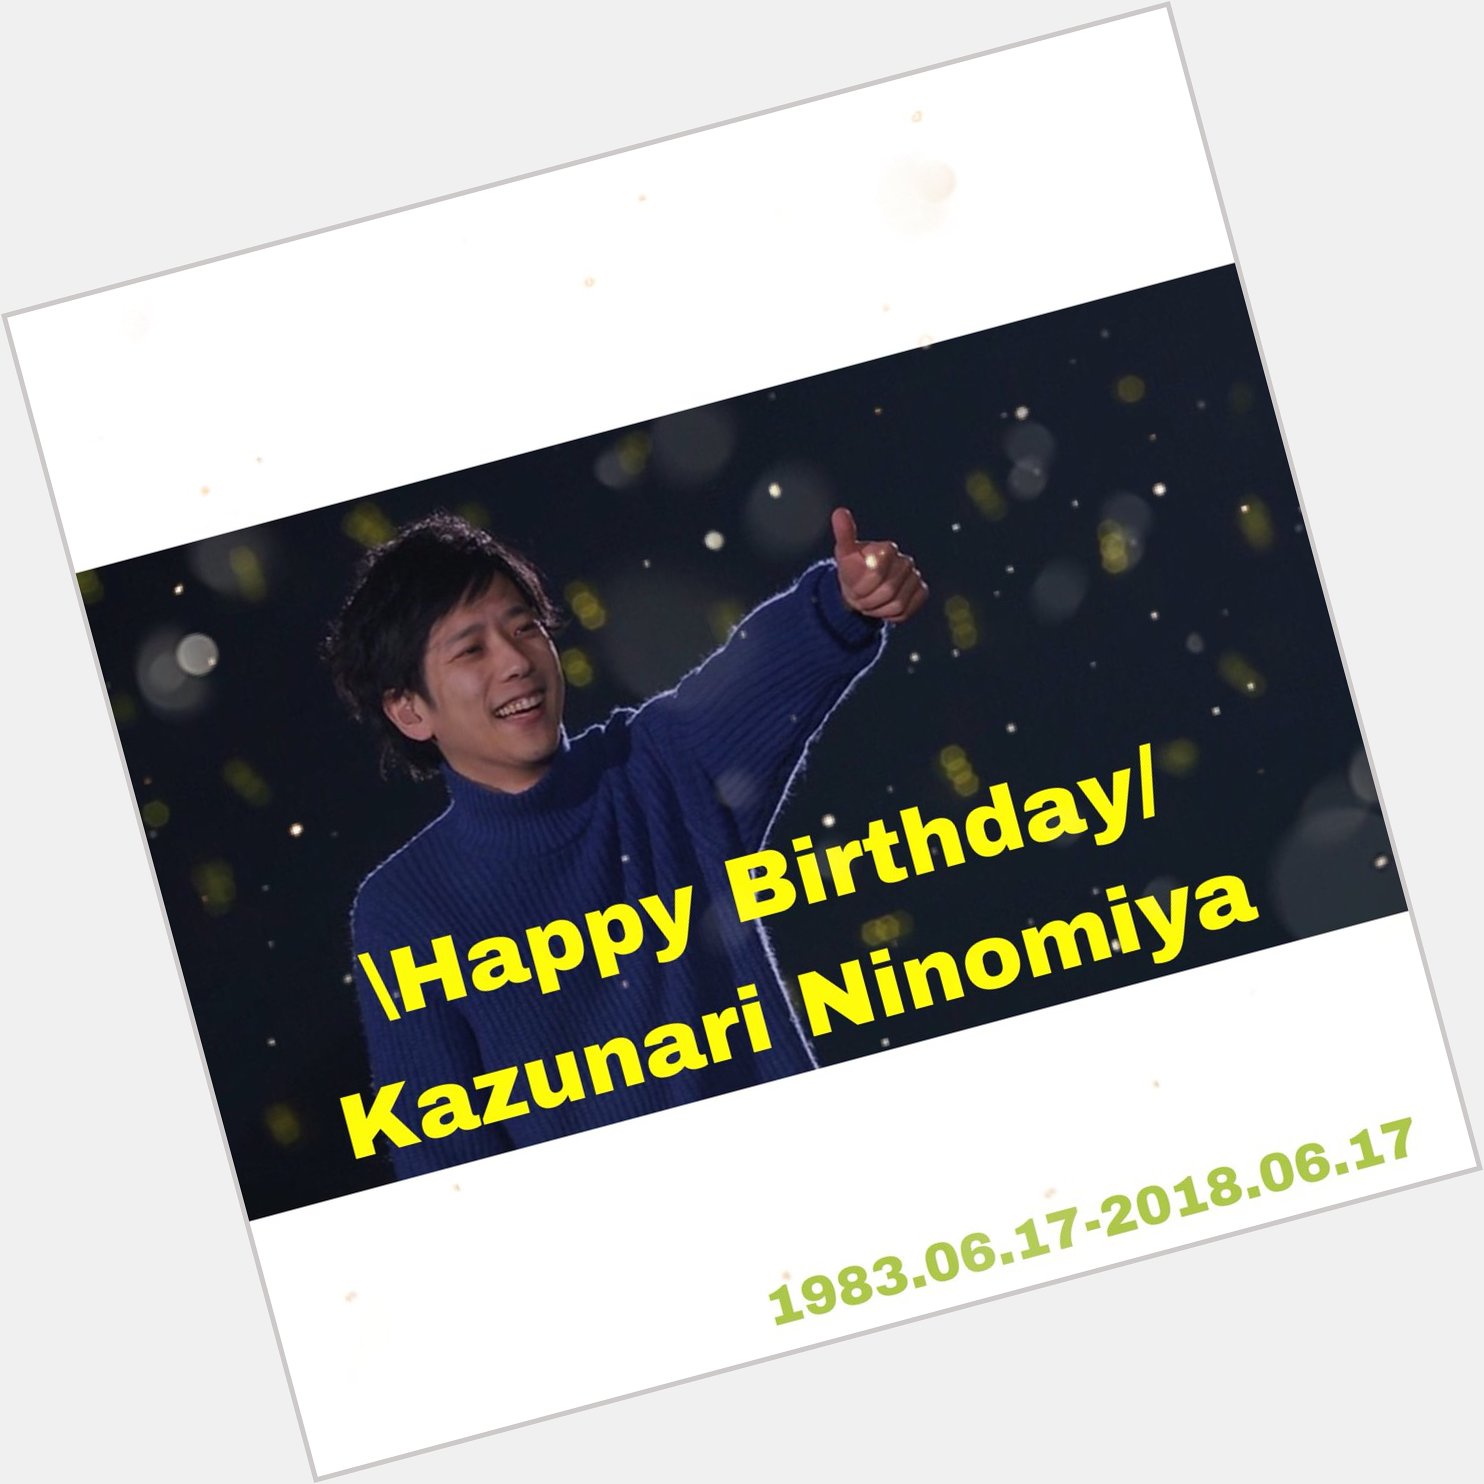 \\Happy Birthday/
     Kazunari Ninomiya                                      TOP                  